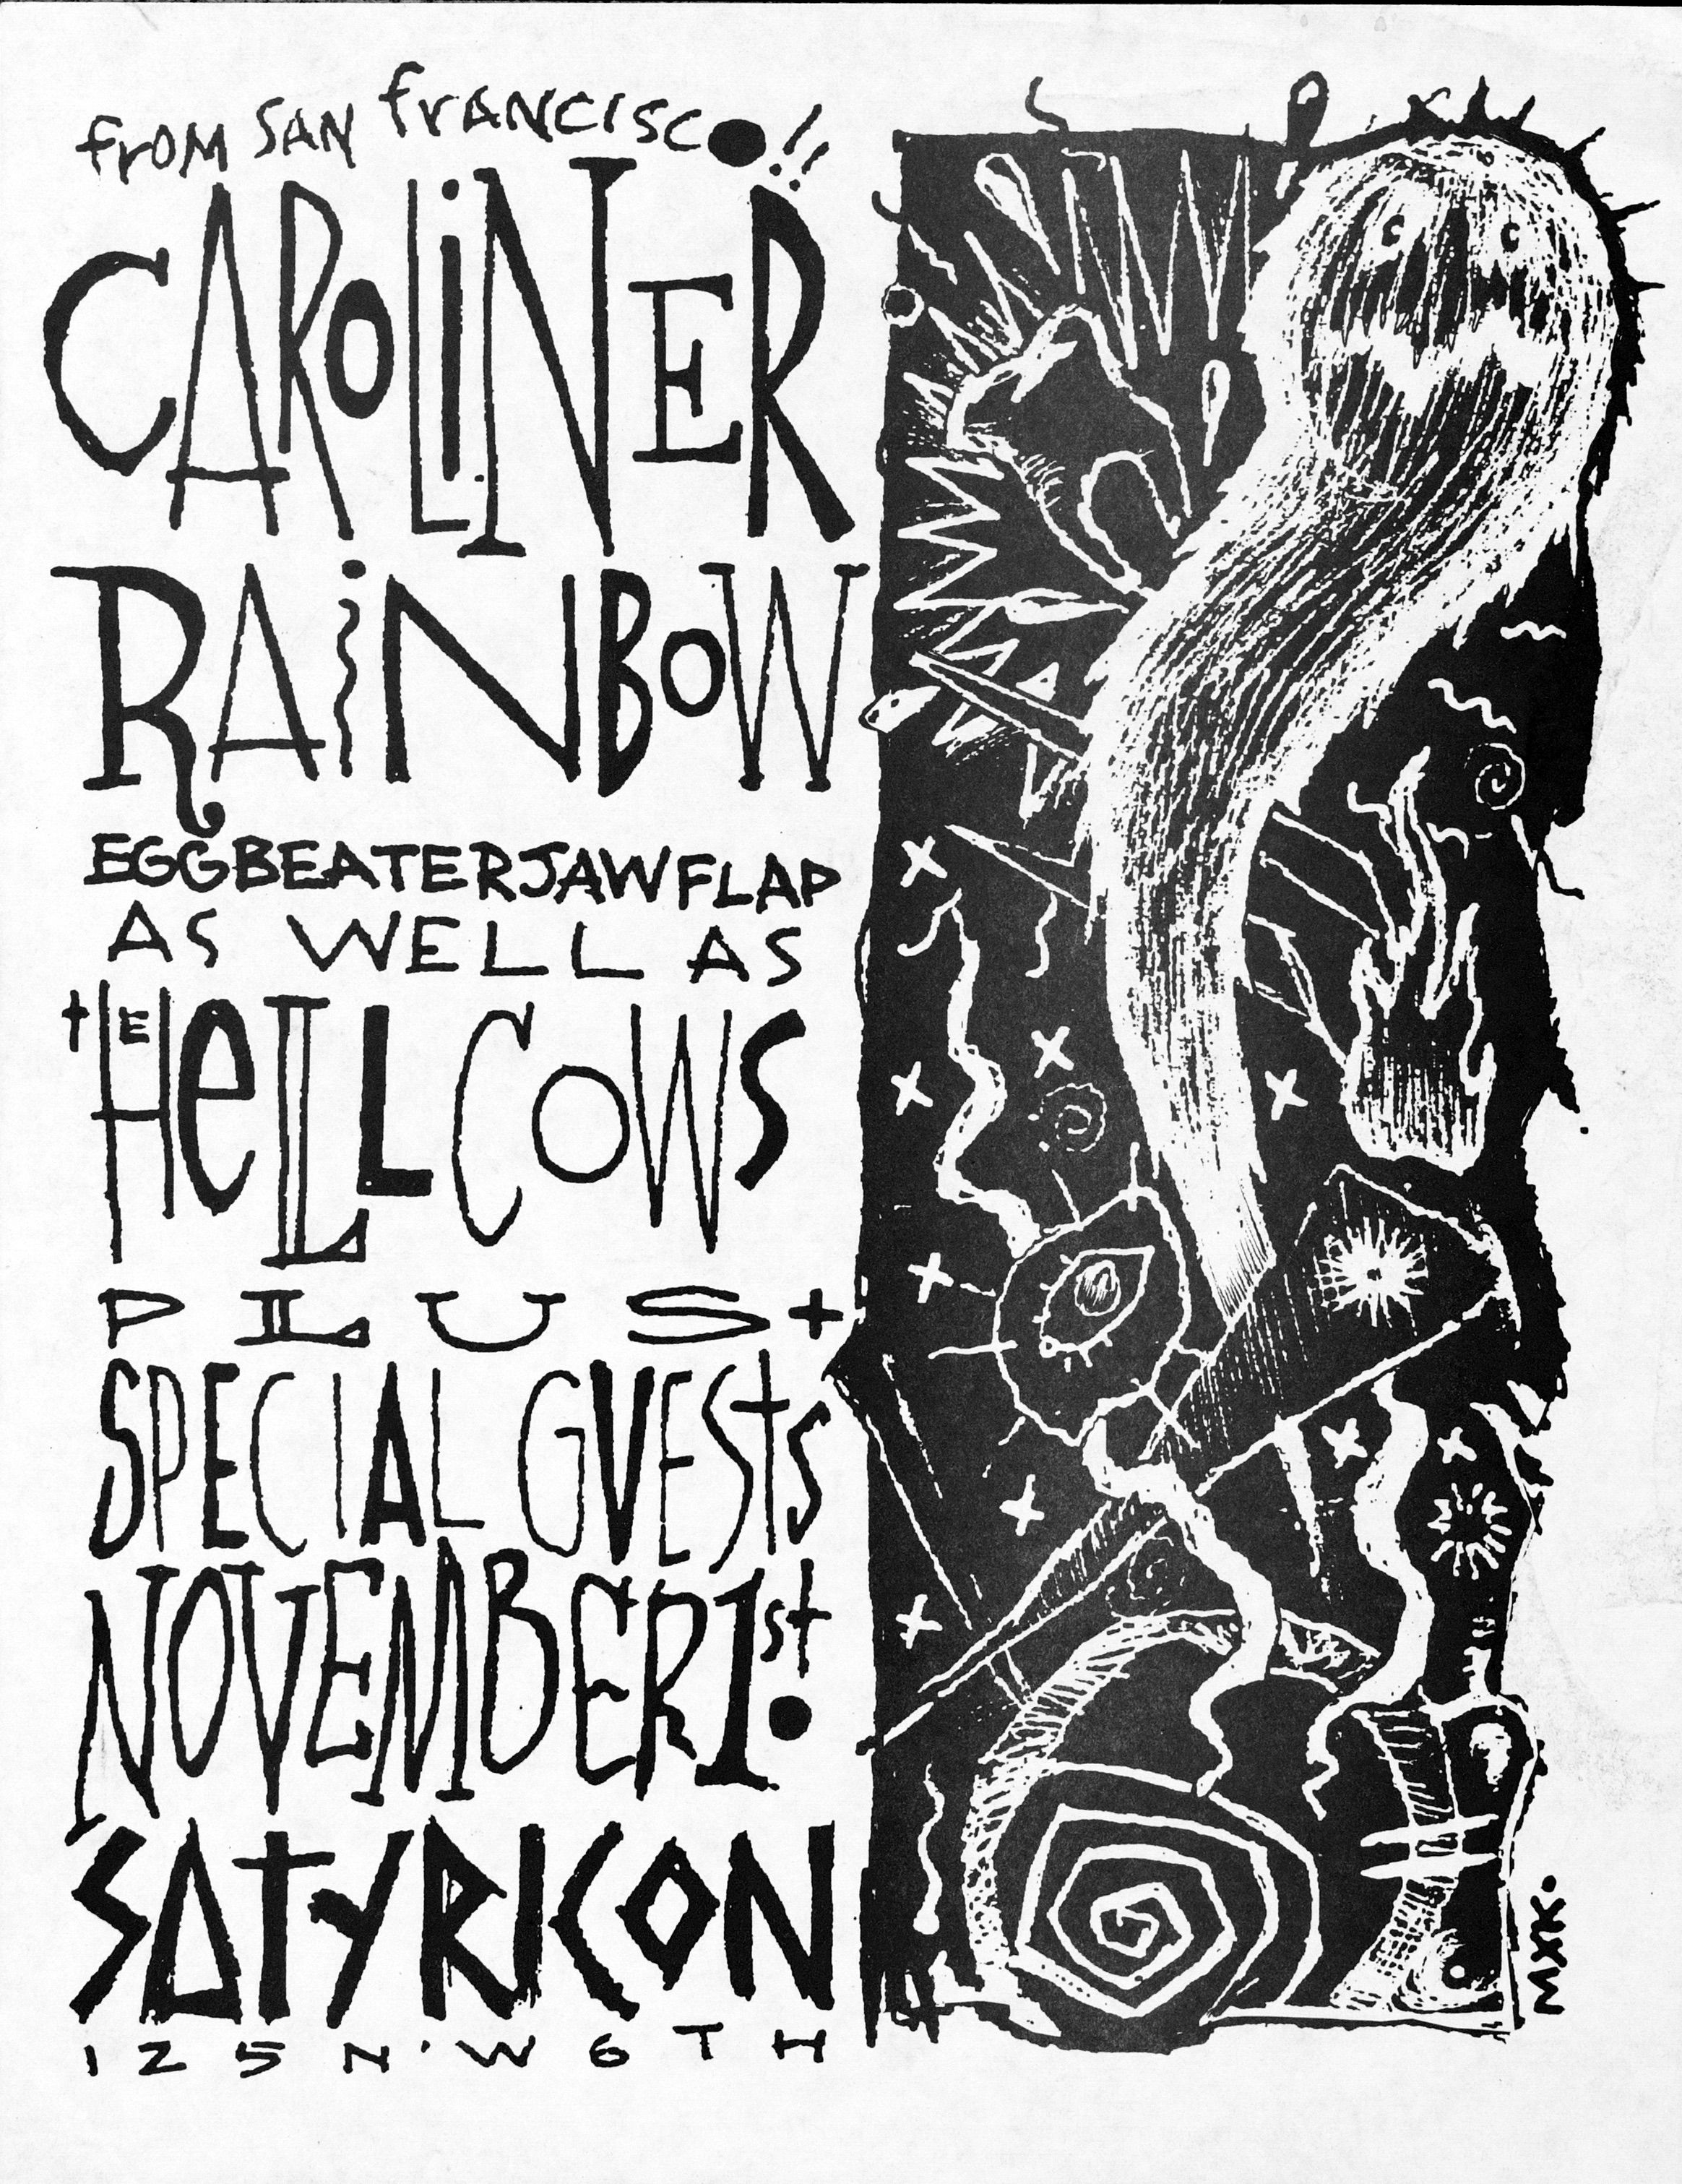 MXP-46.6 Caroliner Rainbow 1987 Satyricon  Nov 1 Concert Poster